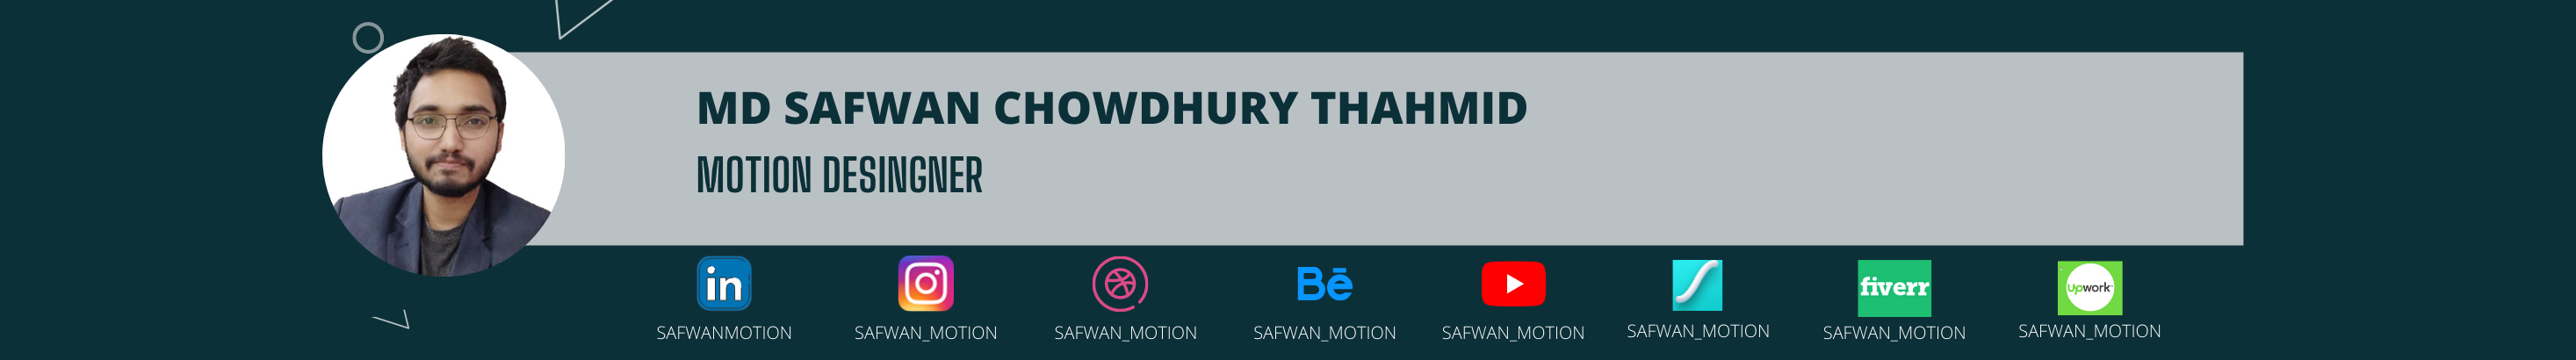 Safwan Chowdhury Tahmid's profile banner